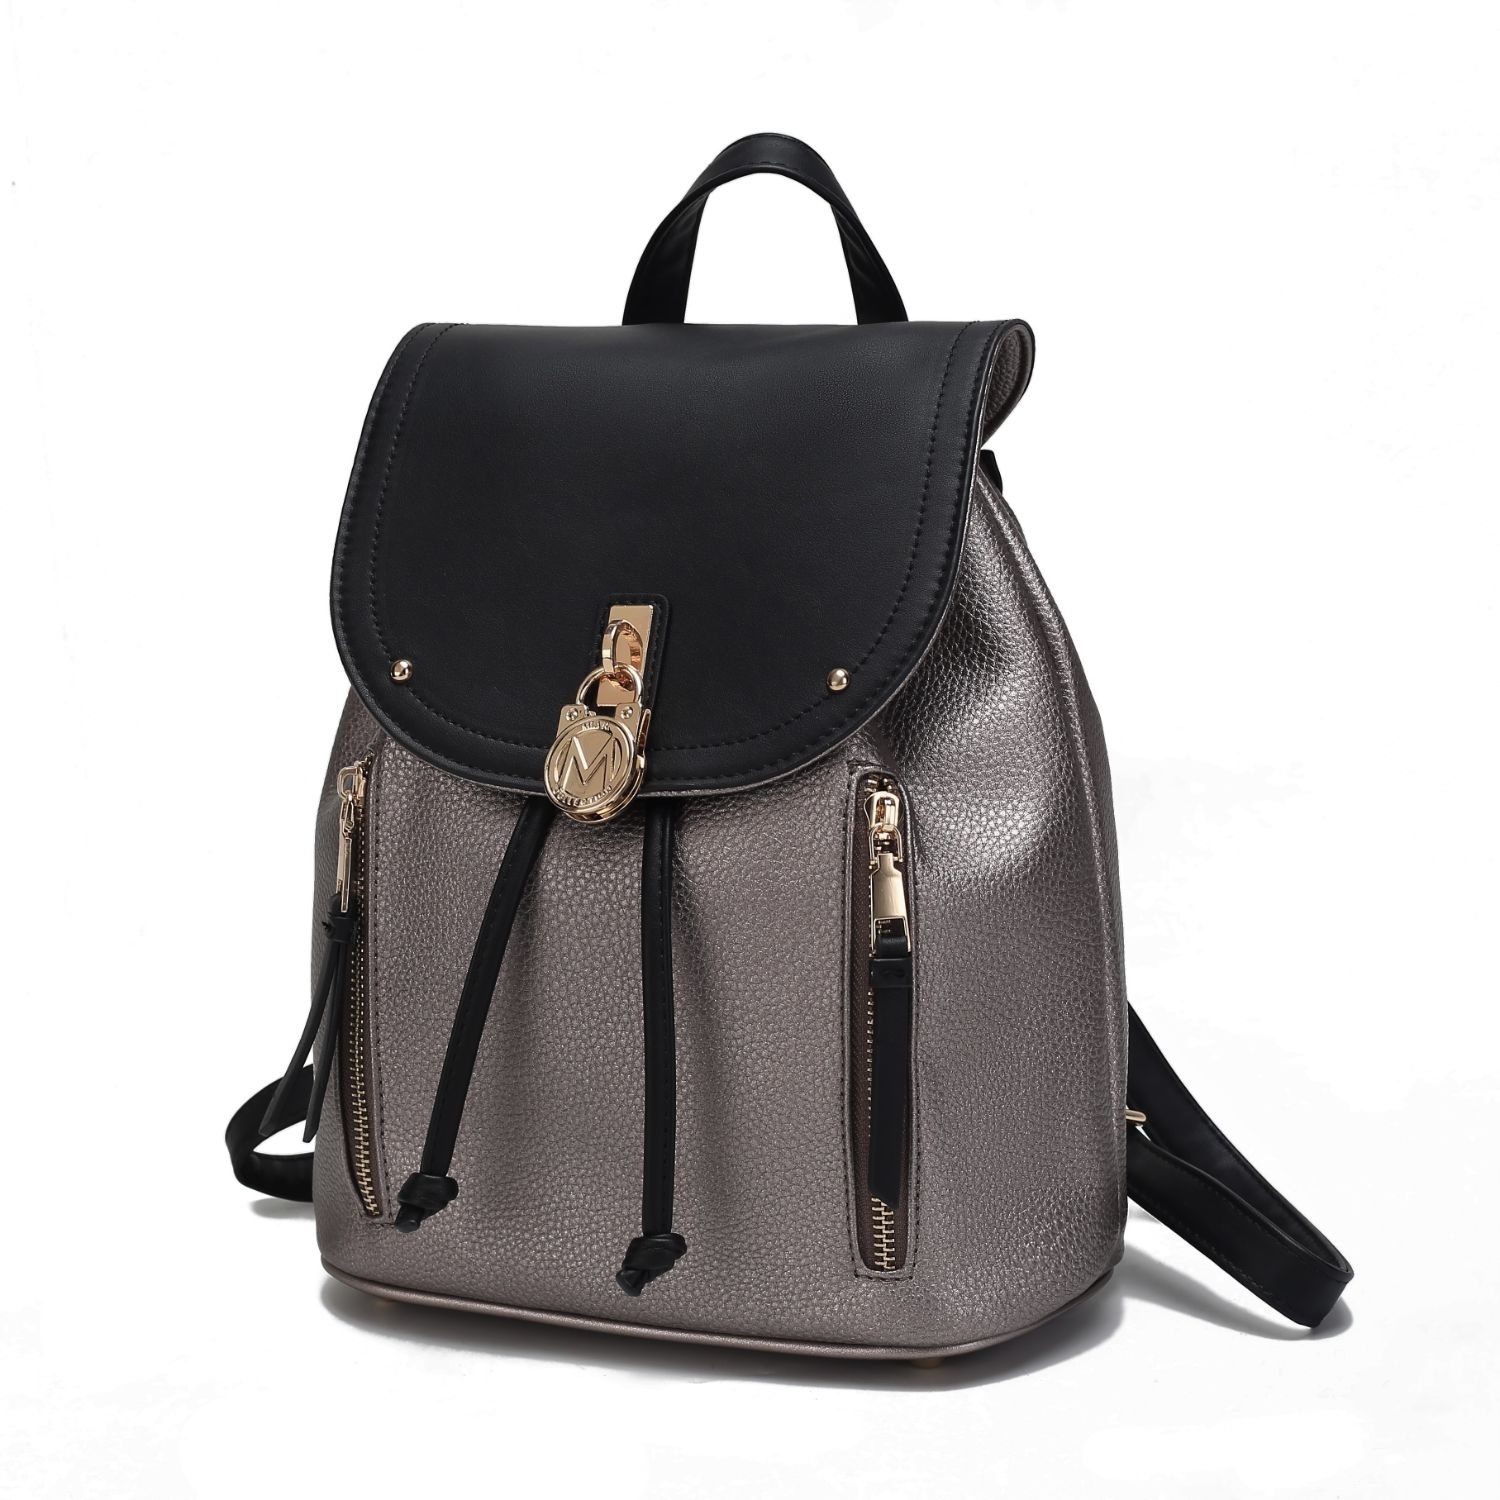 MKF Collection Xandria Vegan Leather Women's Backpack Handbag By Mia K - Pewter-black